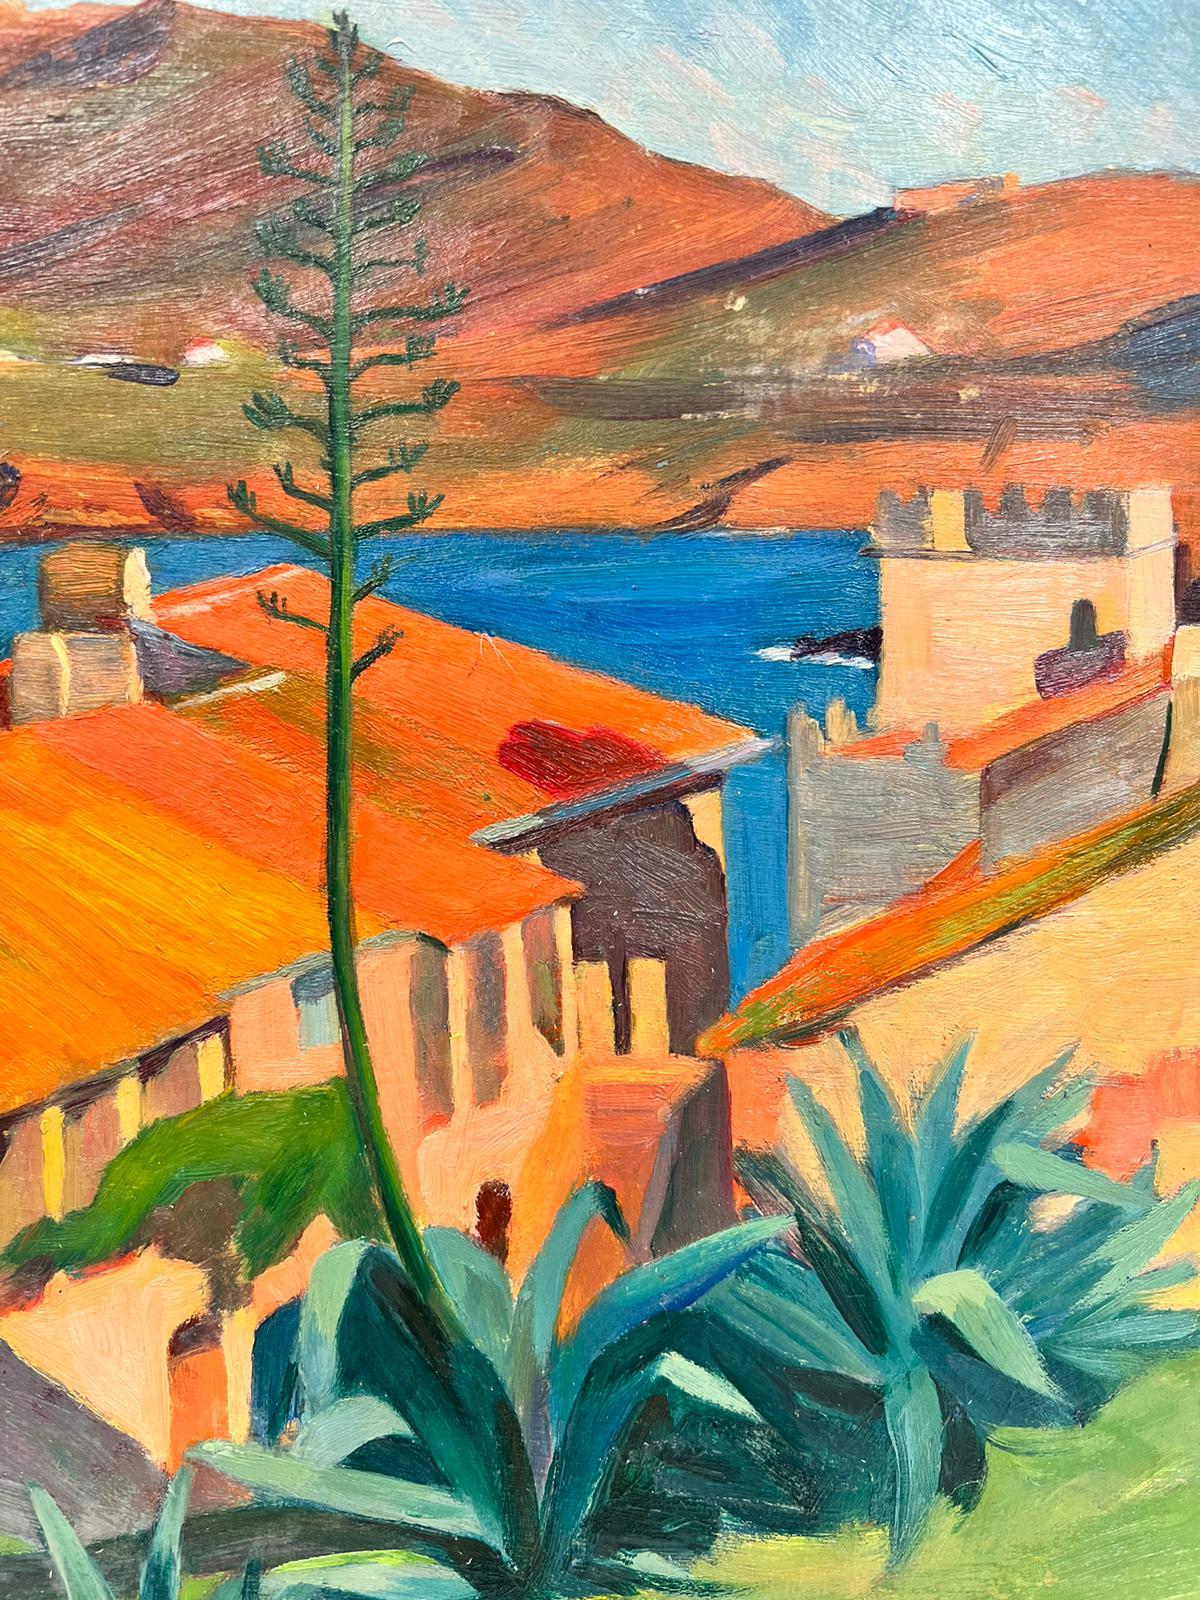 Artist/ School: Suzanne Crochet (French c. 1930), female French Impressionist artist

Title: Orange Roofs, Green Plants (coastal scene in France). 

Medium: oil on board, unframed 

board: 13 x 9 inches

Provenance: private collection,